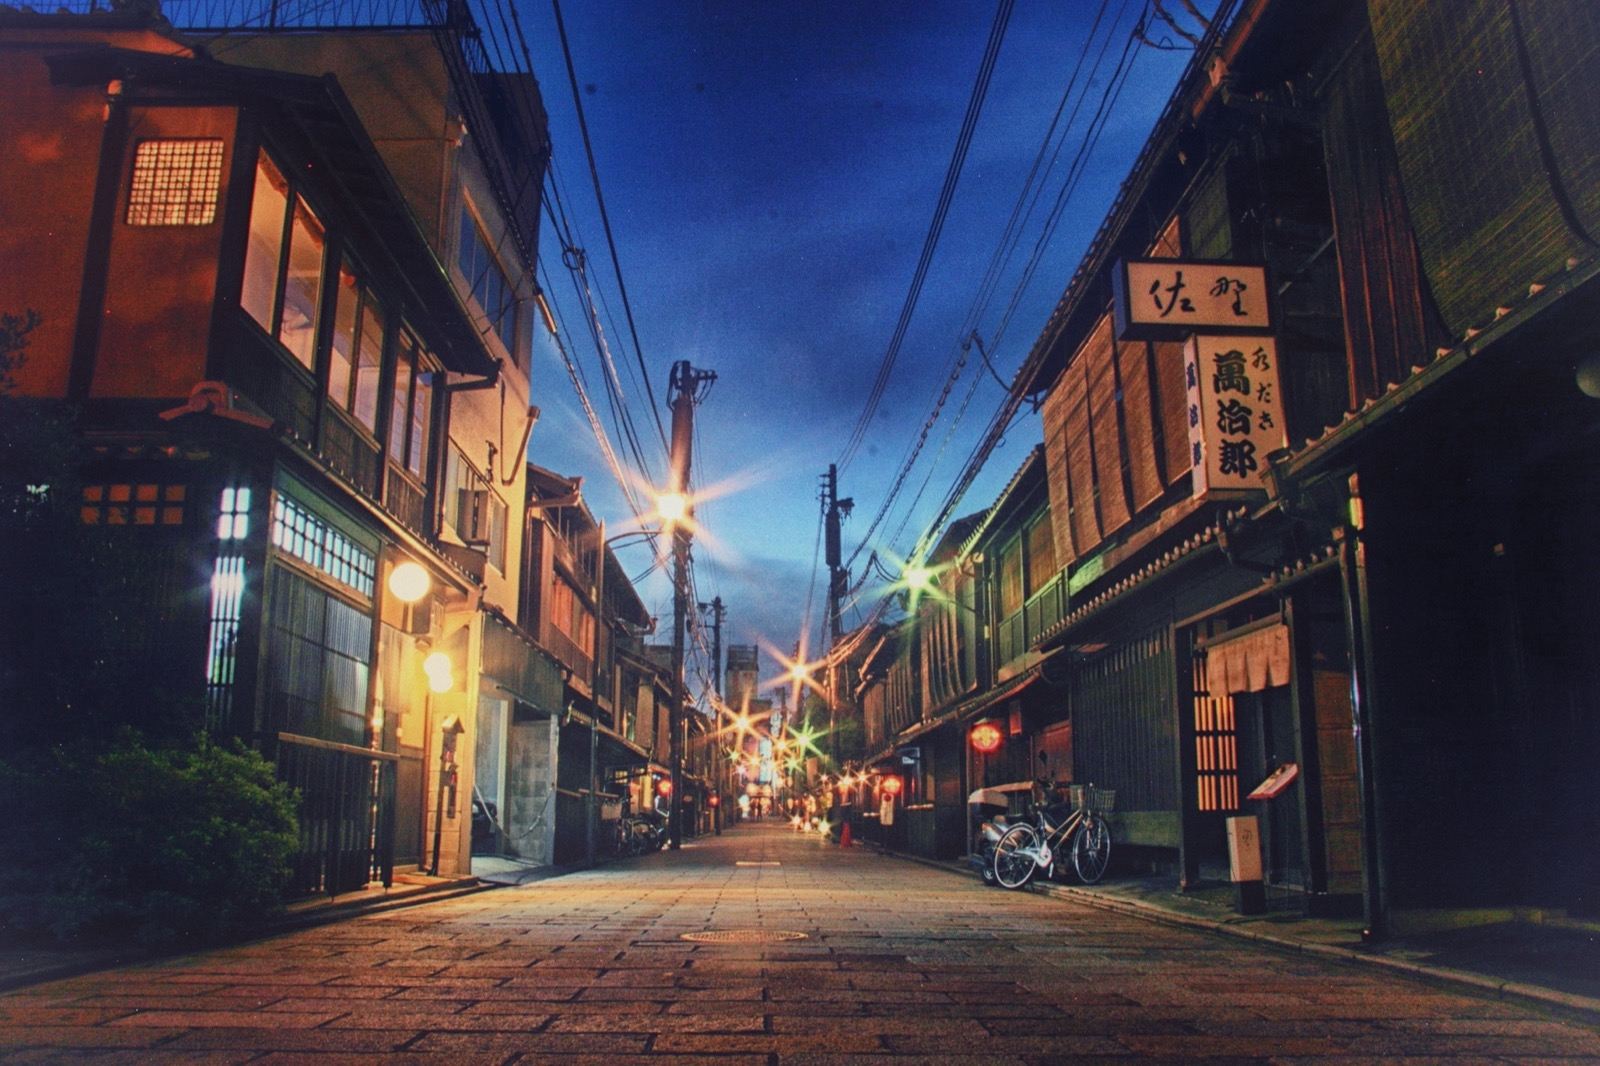 Photo of Hanami-koji Dori Historic Street, Japan (roadway between buildings at nighttime photo by Fabrizio Chiagano)